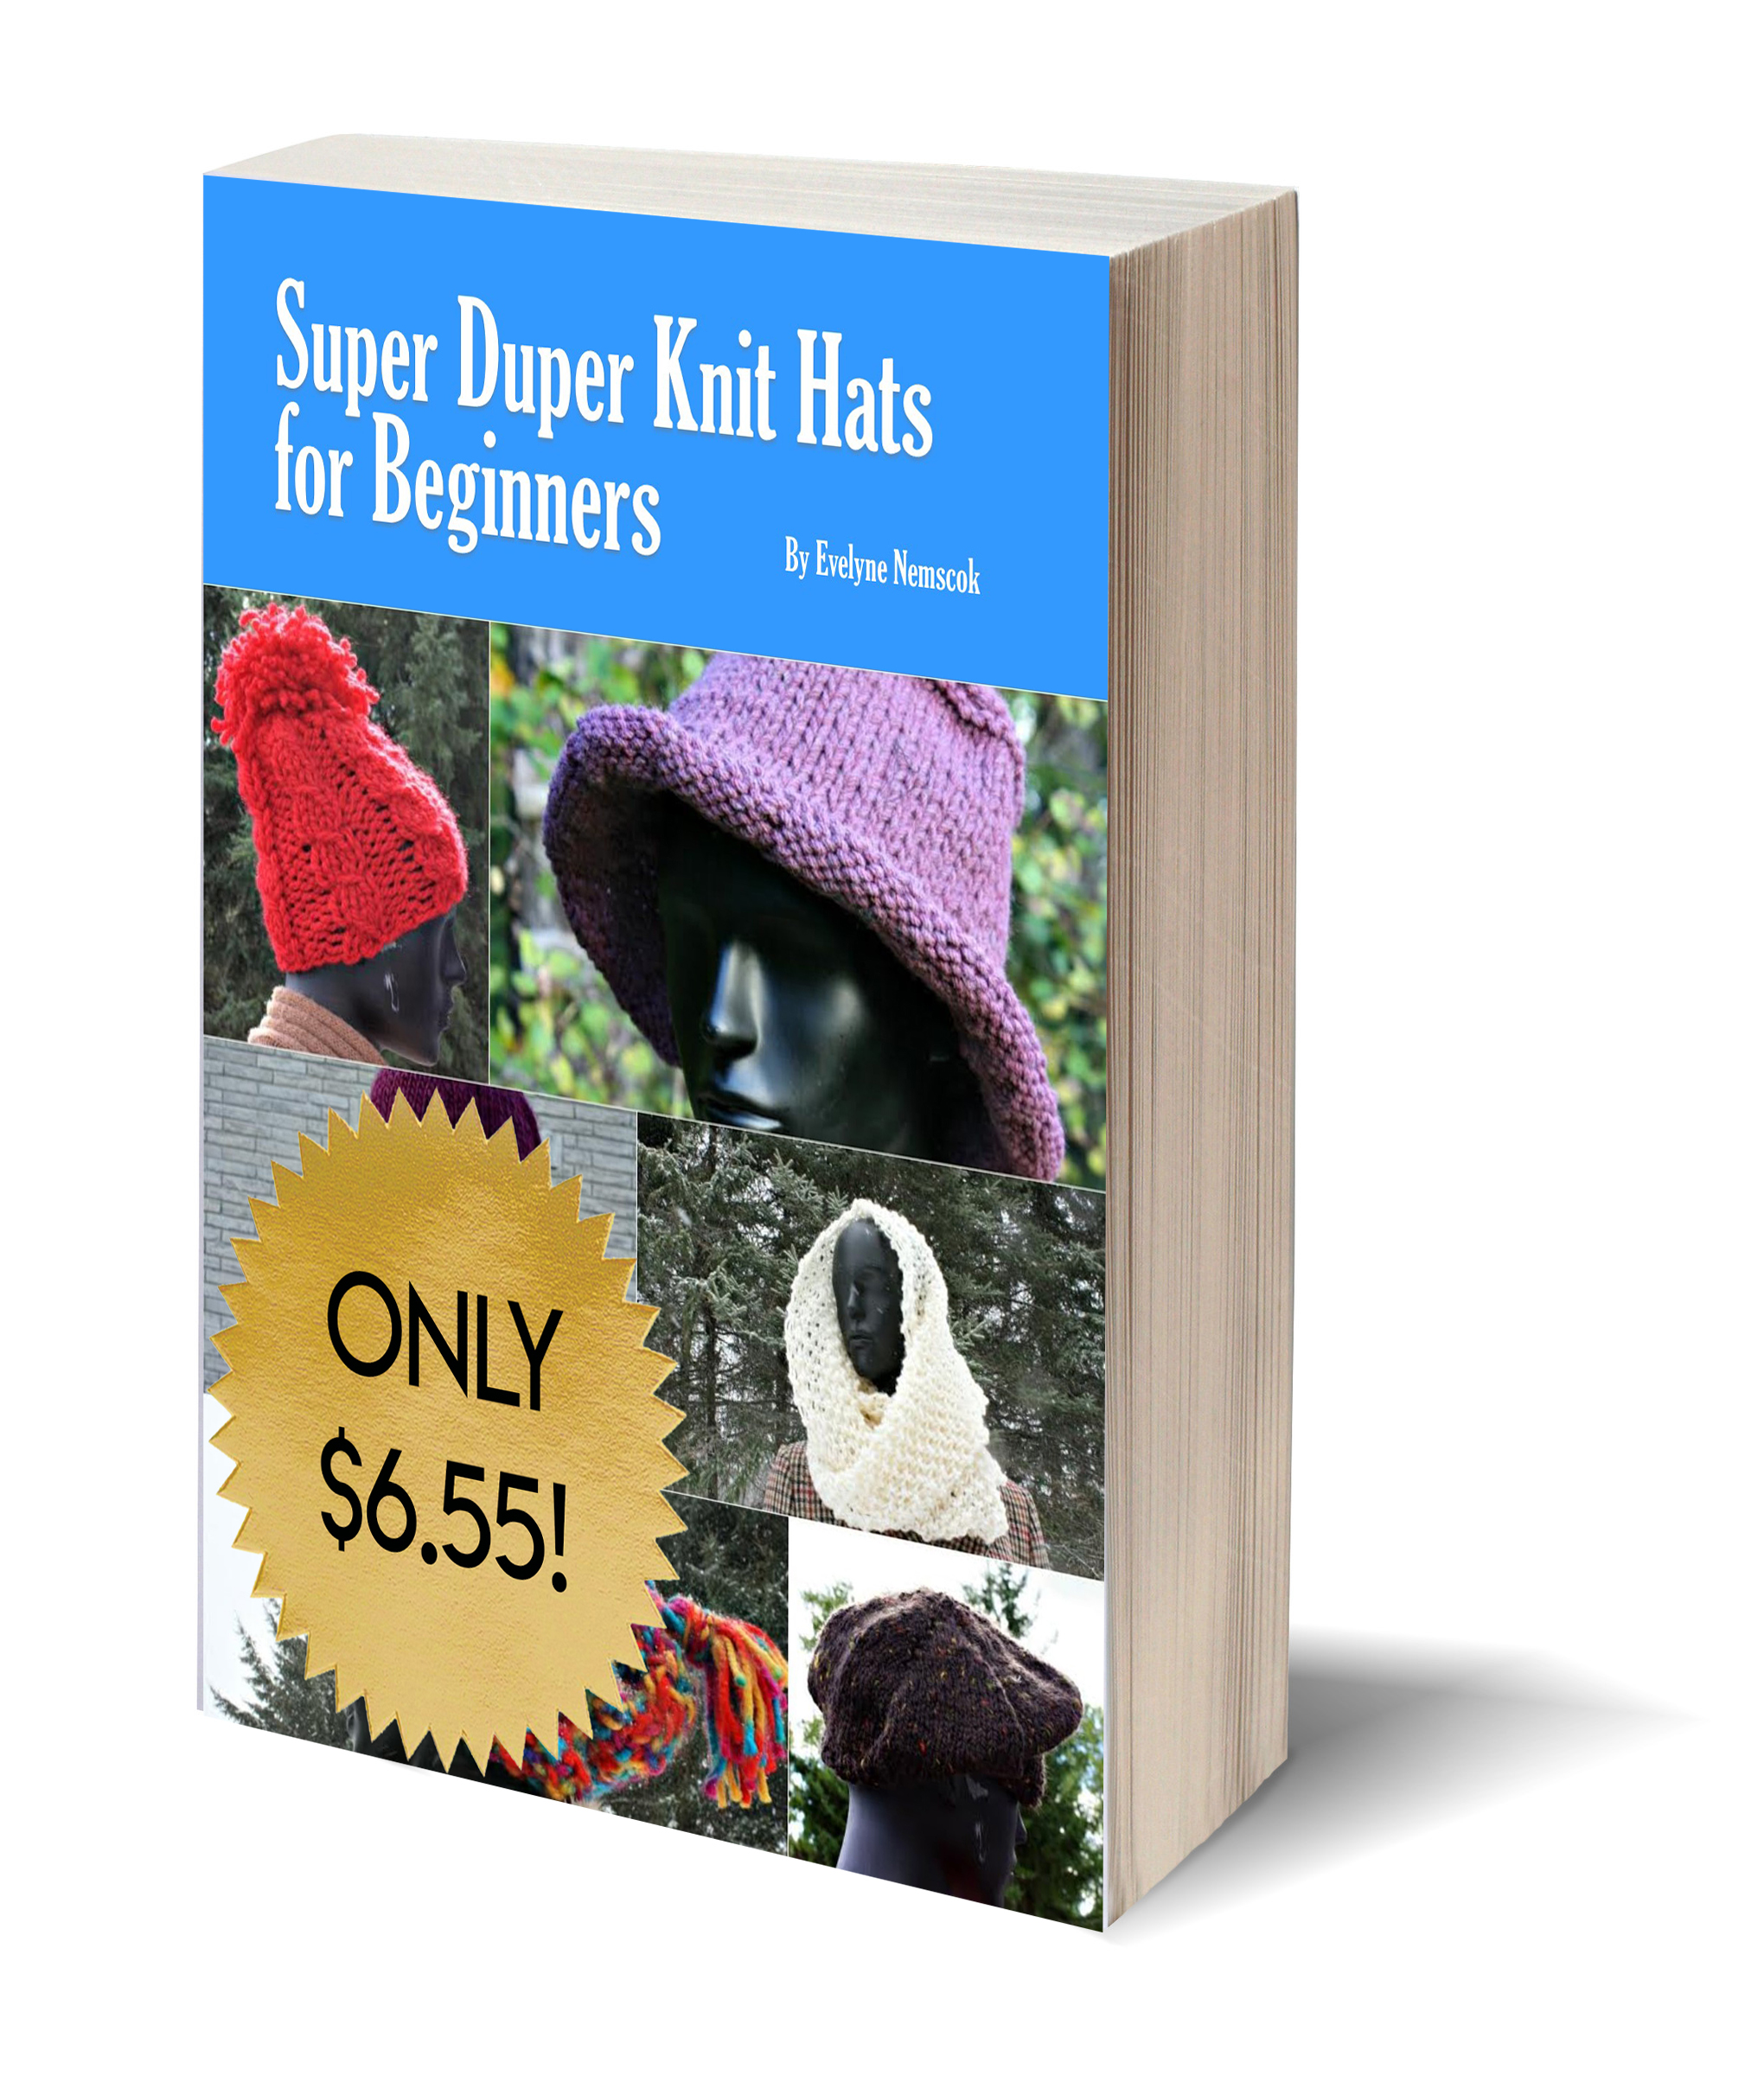 Super Duper Knit Hats for Beginners